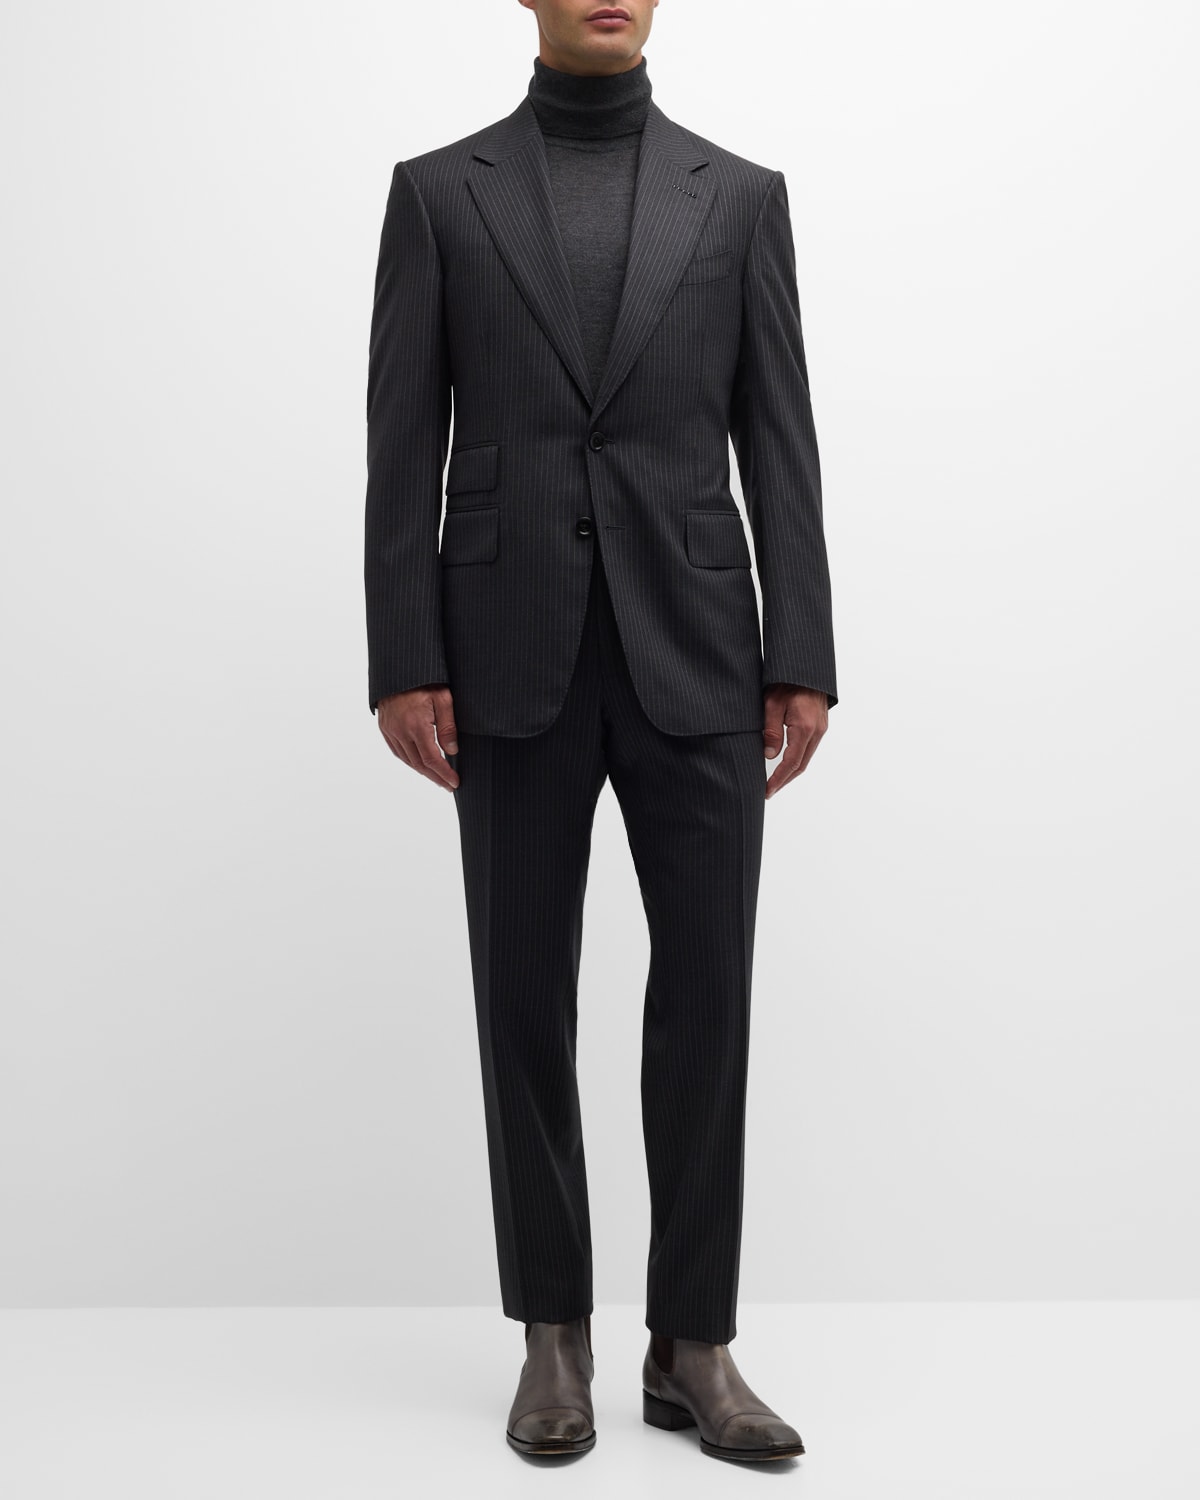 Tom Ford Men's Shelton Pinstripe Suit In Dark Grey